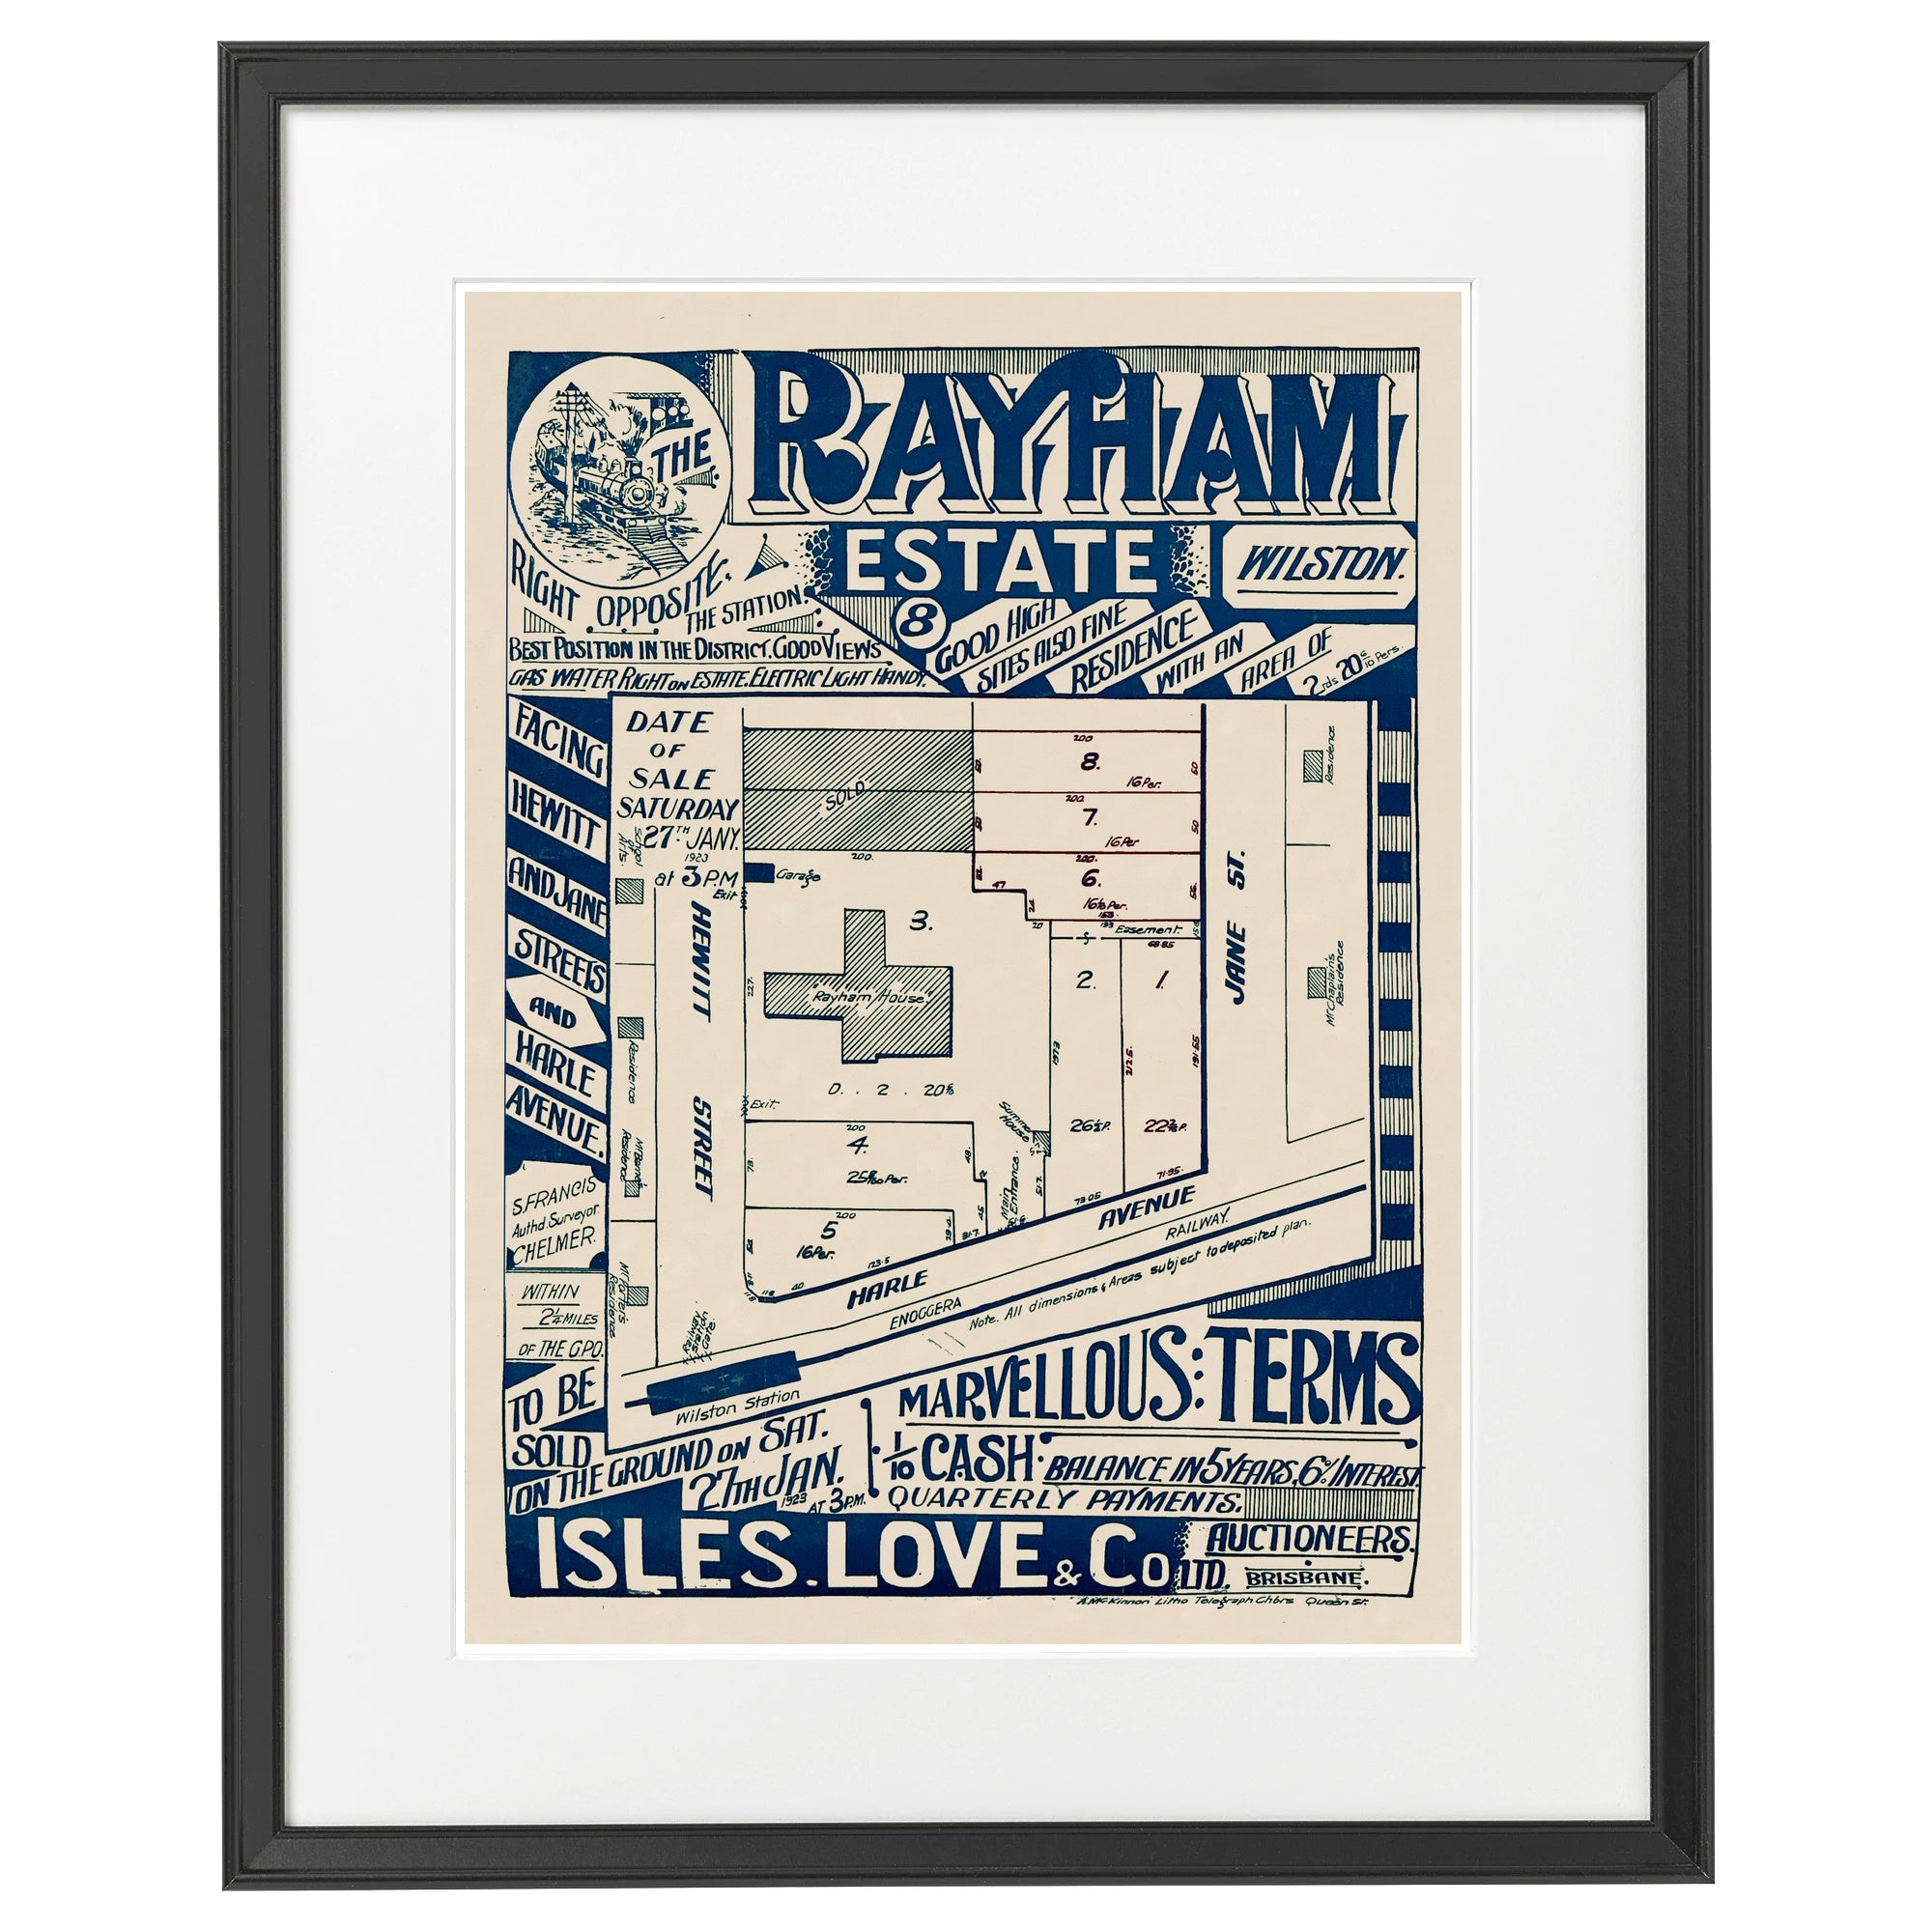 1923 Rayham Estate - 100 years ago today